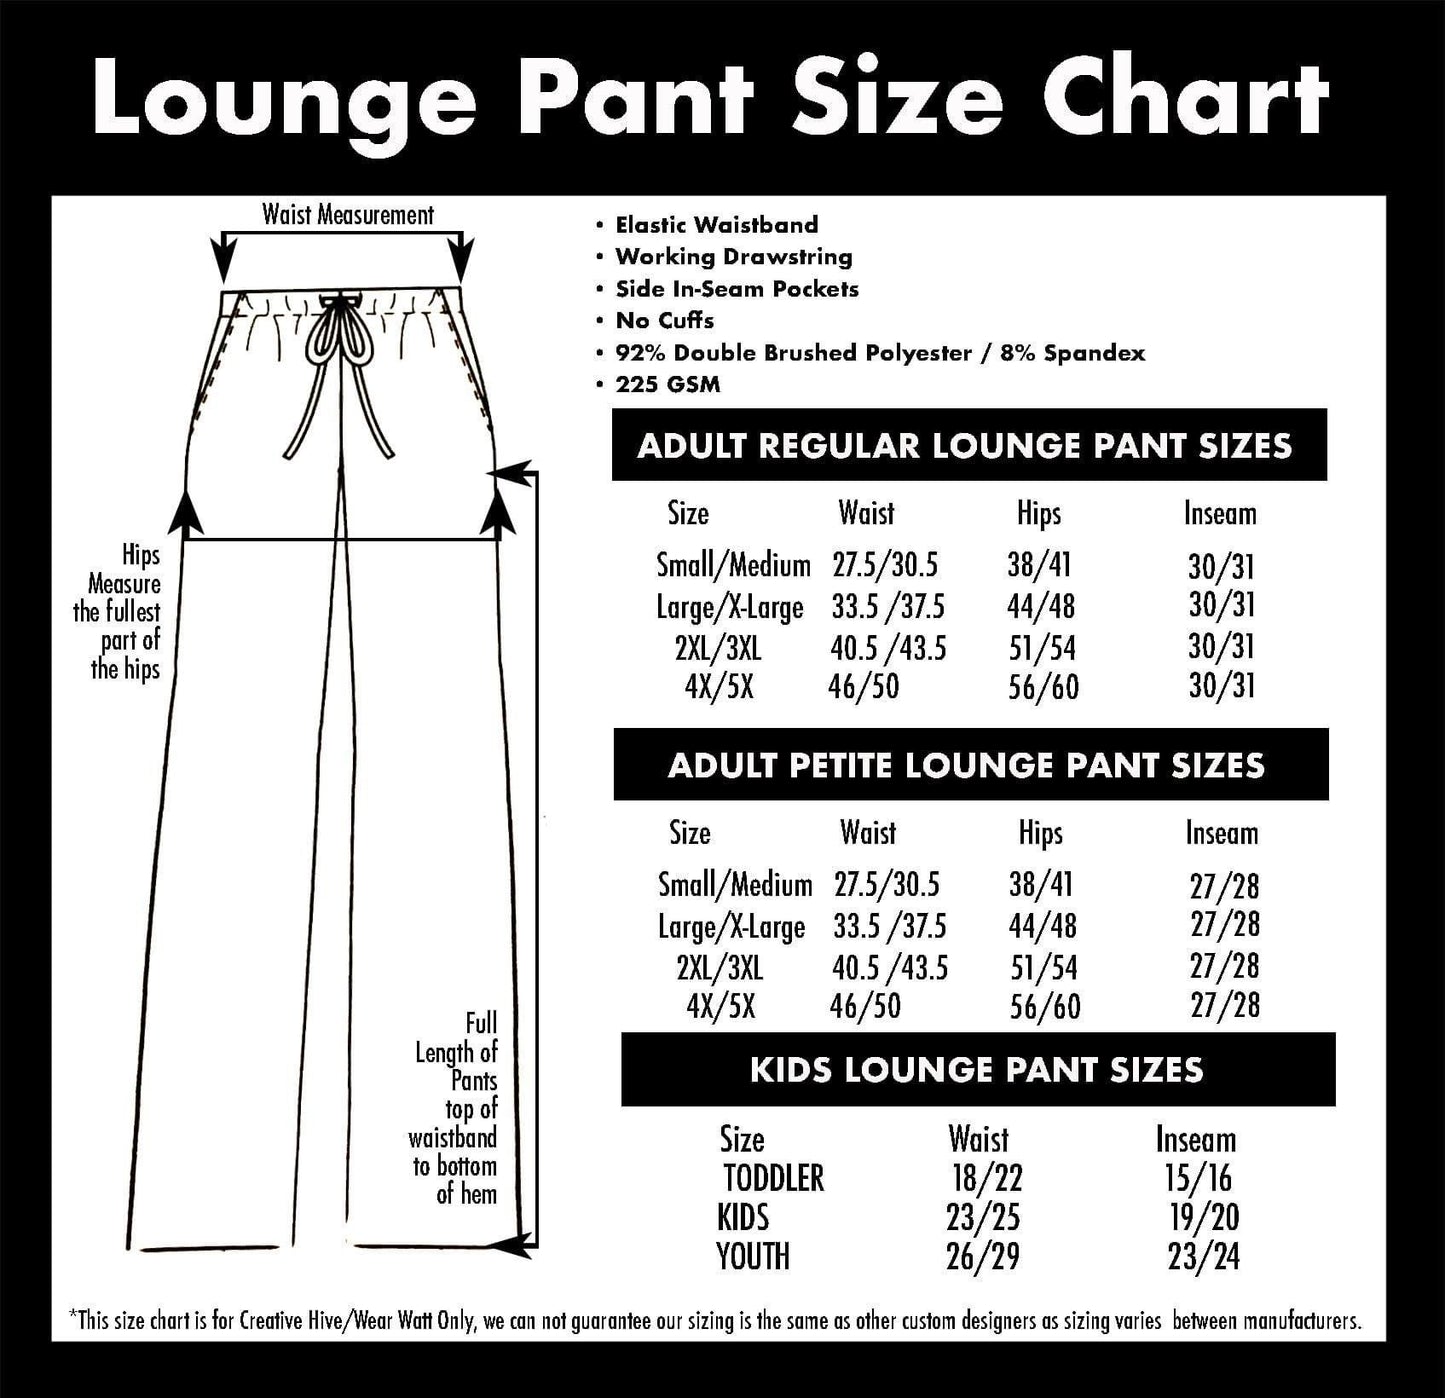 The Platform Lounge Pants